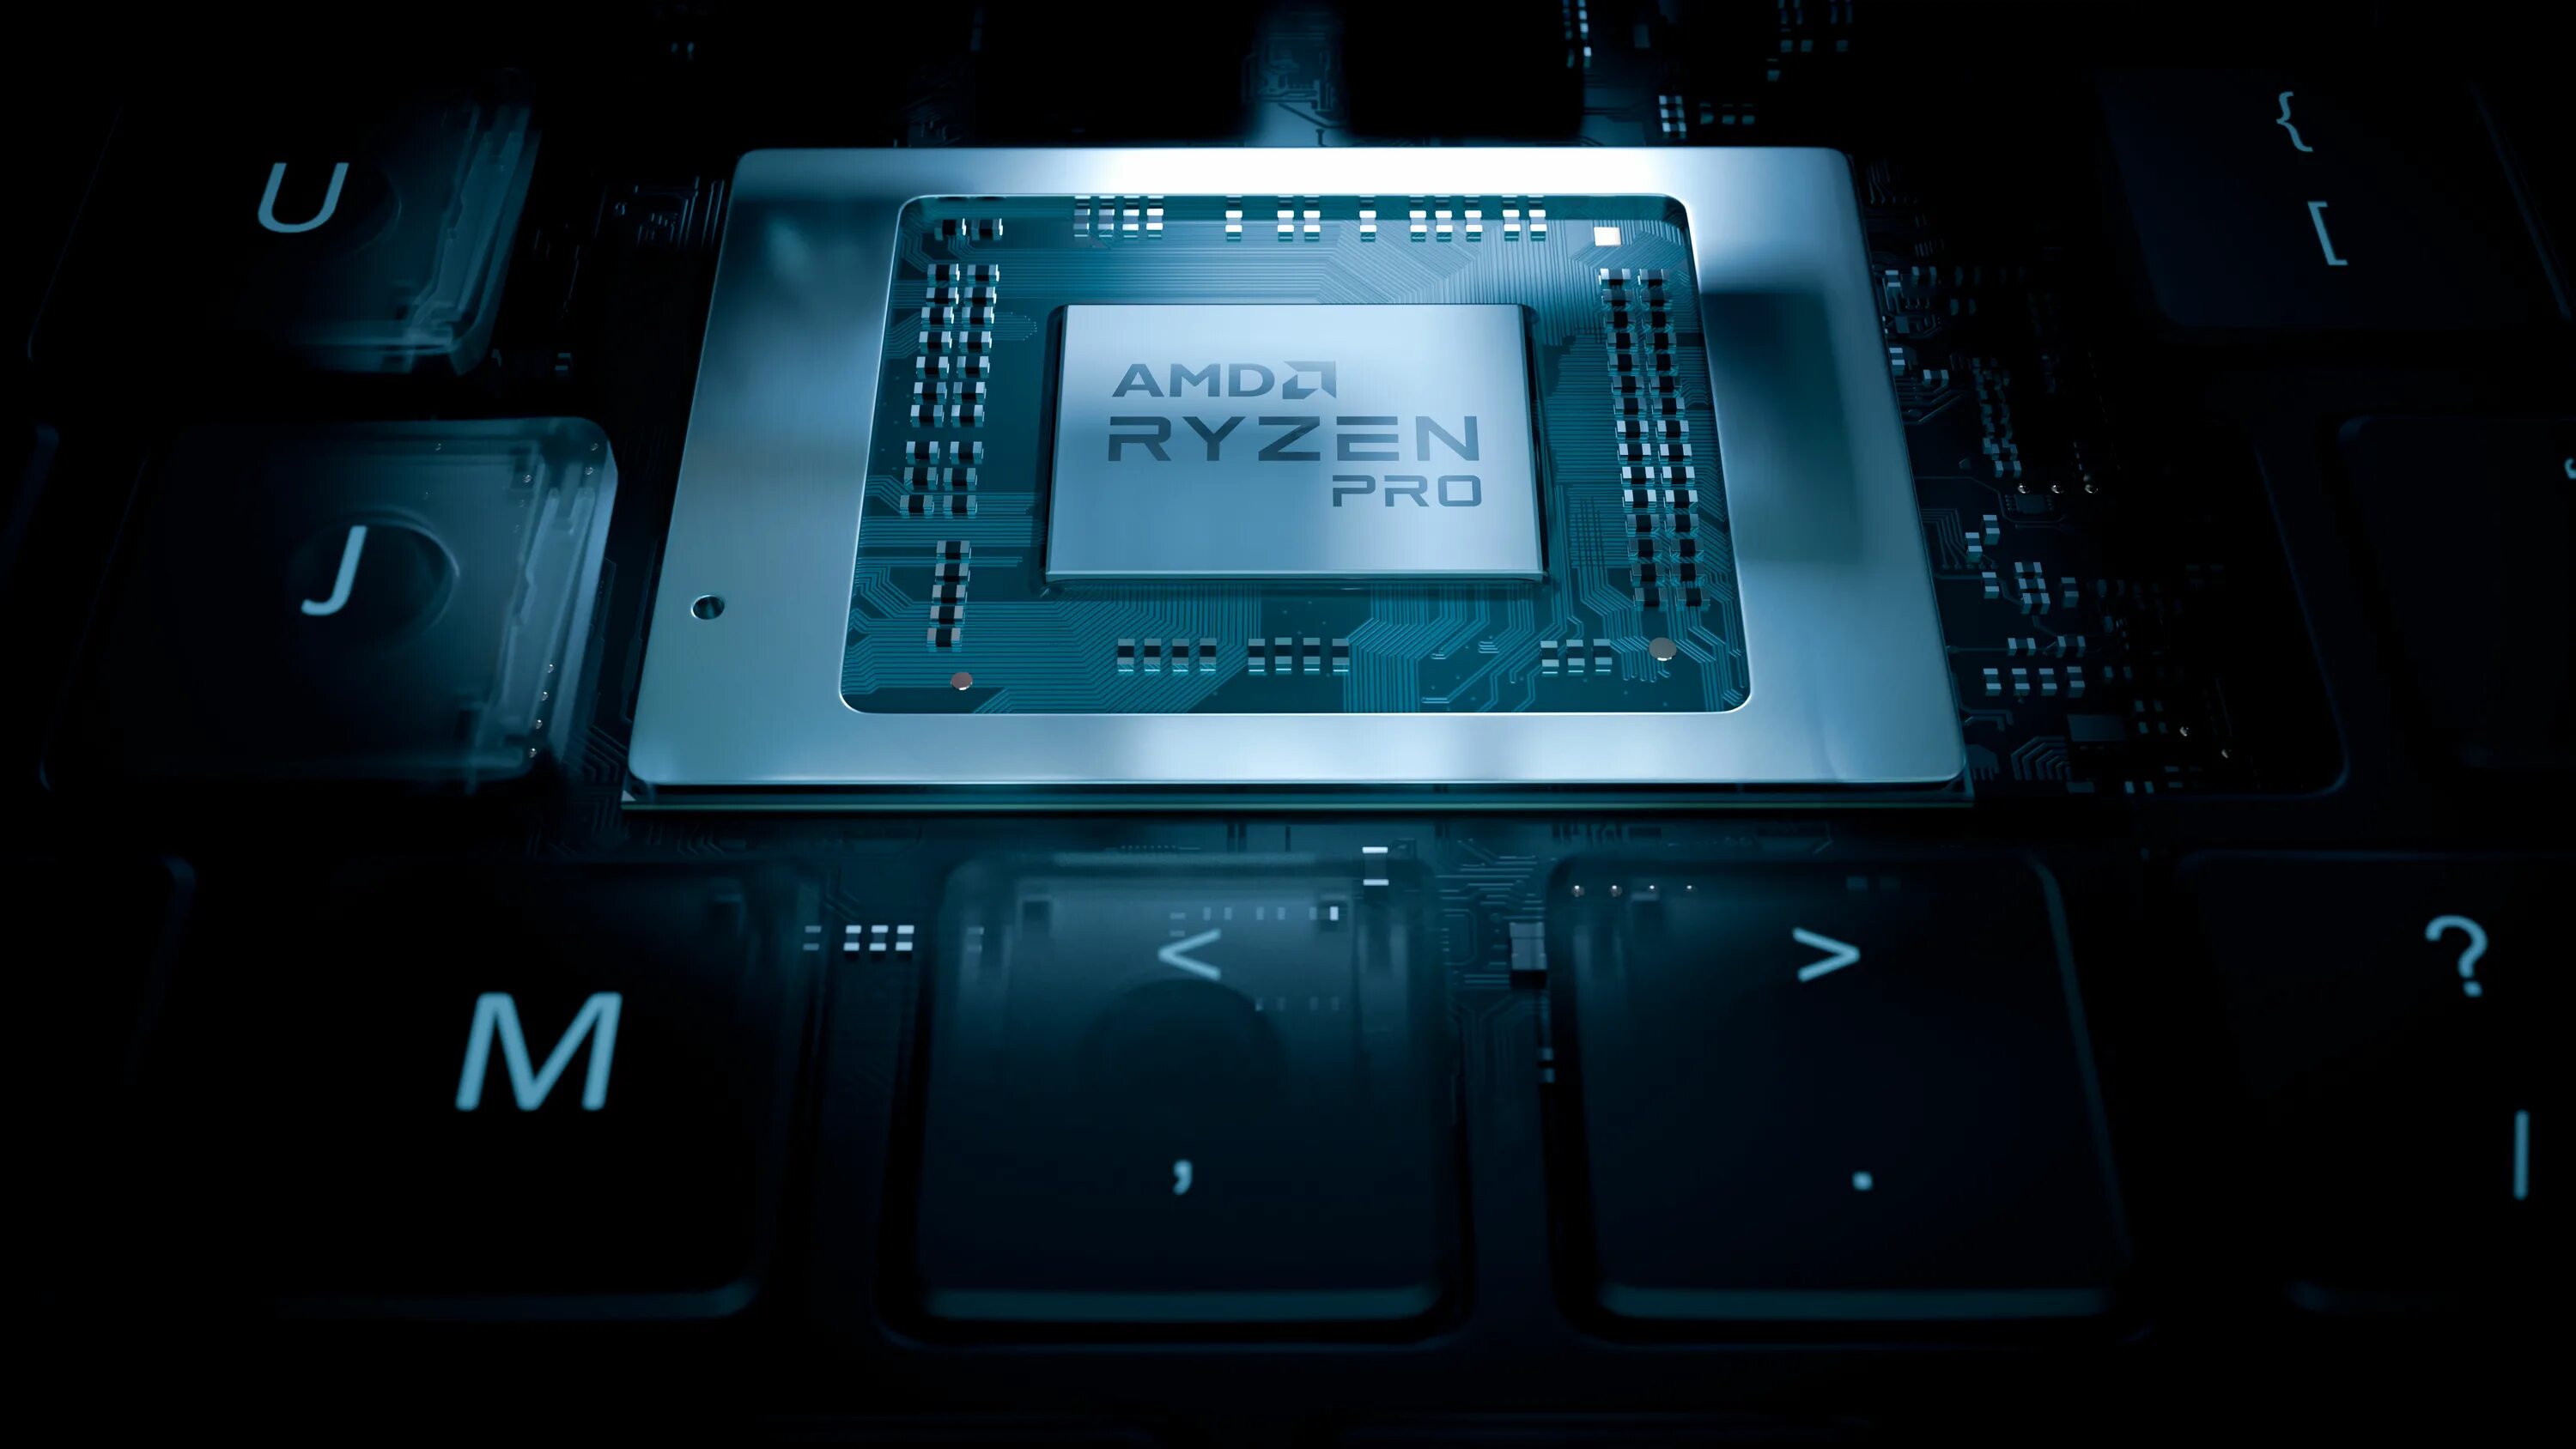 Amd ryzen 5 series. Ryzen 5 4000. Процессоров AMD 2020. Процессор AMD Ryzen 5 4600h. Ryzen Pro 4000 Series mobile Processors.